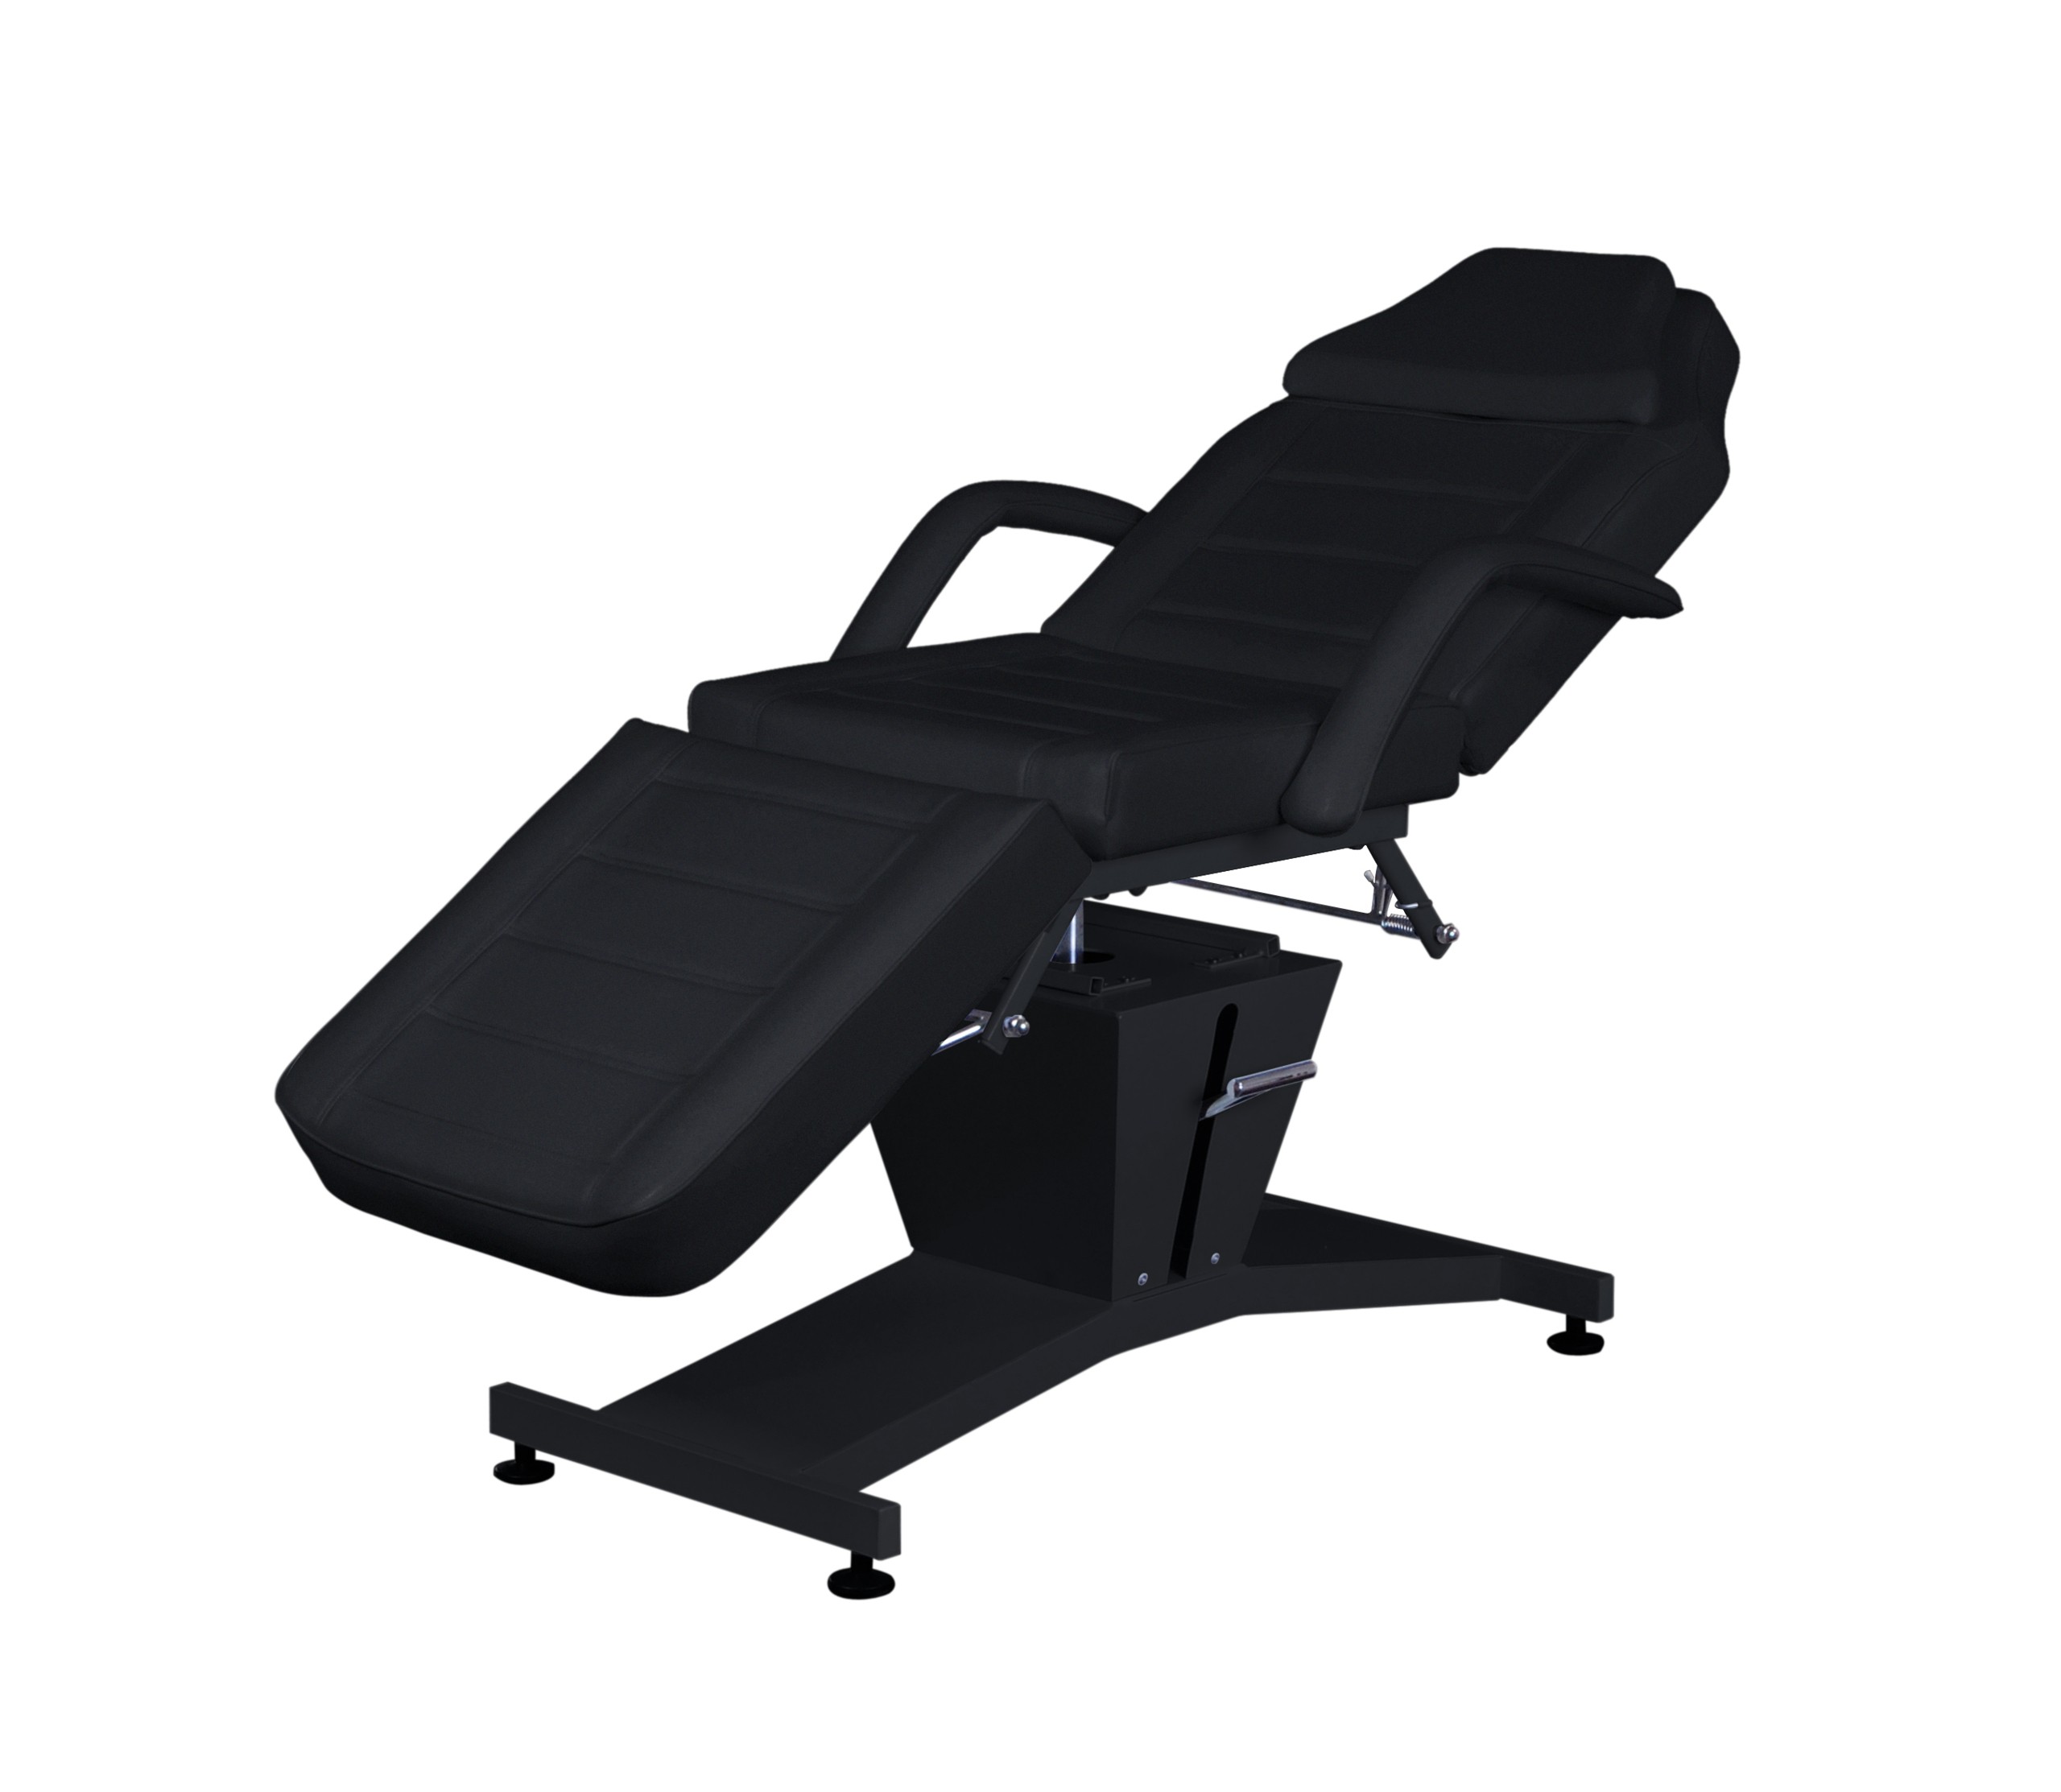 Elite hydraulic pro tattoo chair bed salon furniture